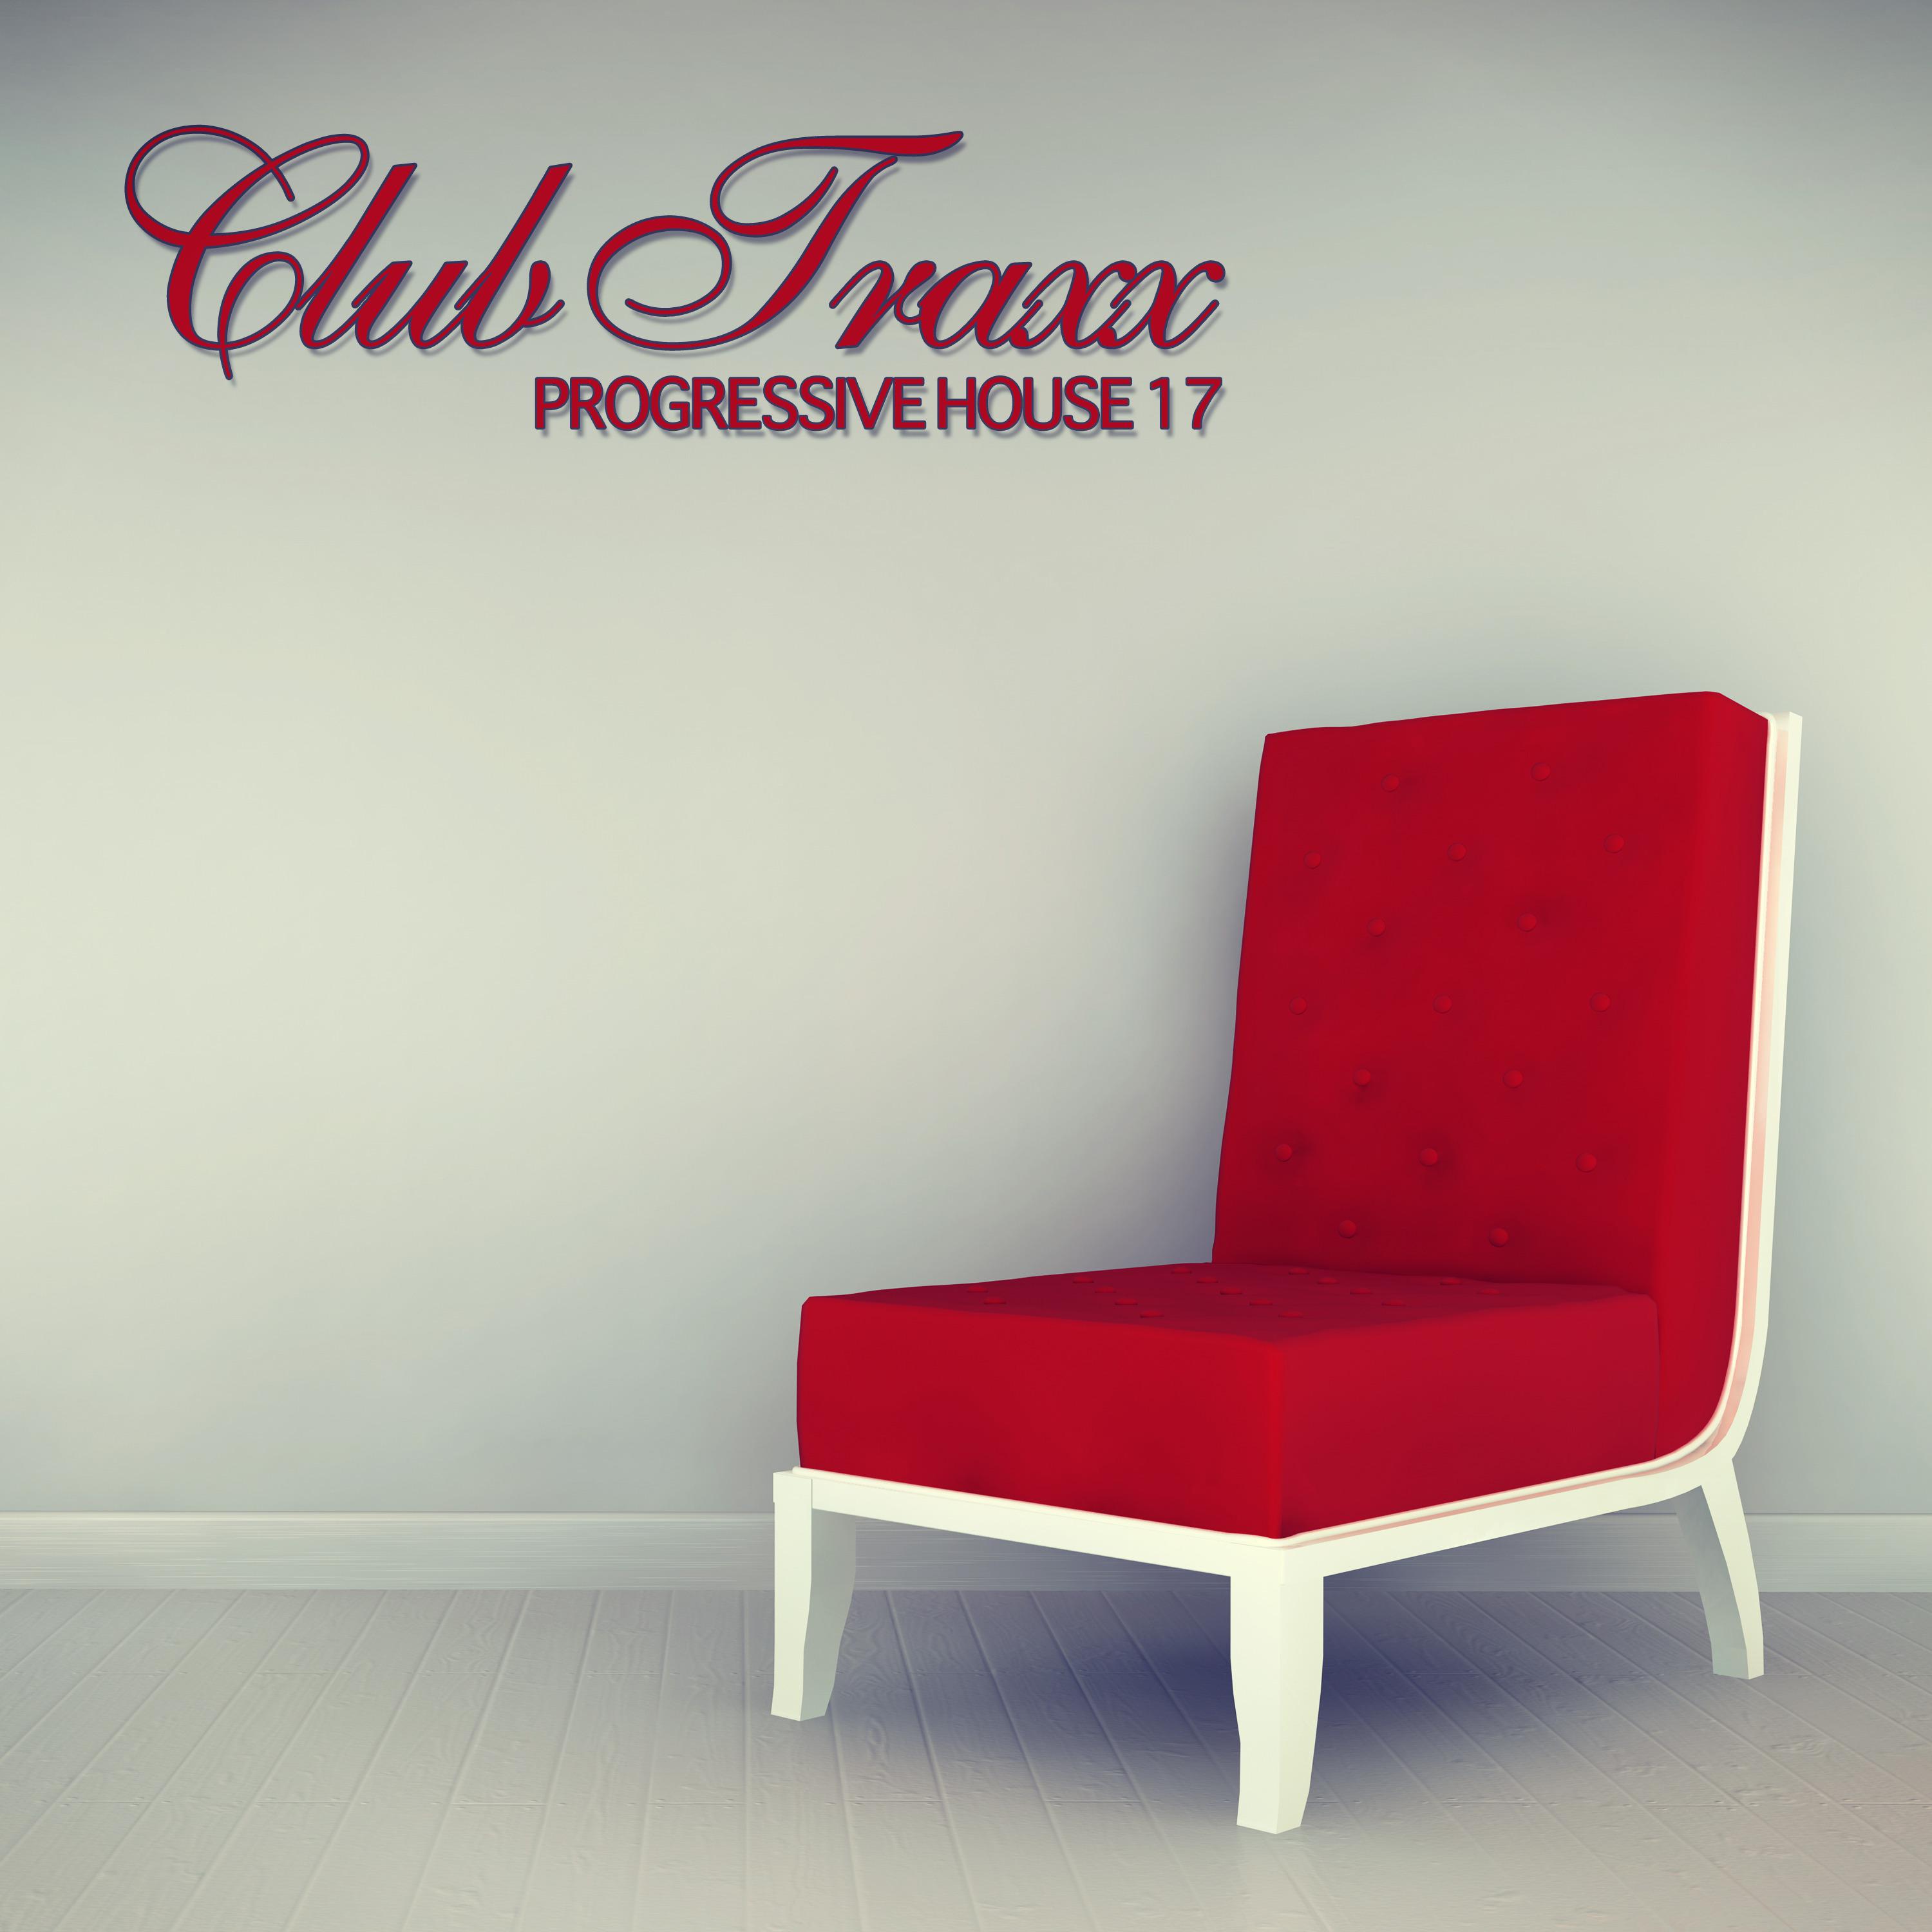 Club Traxx - Progressive House 17